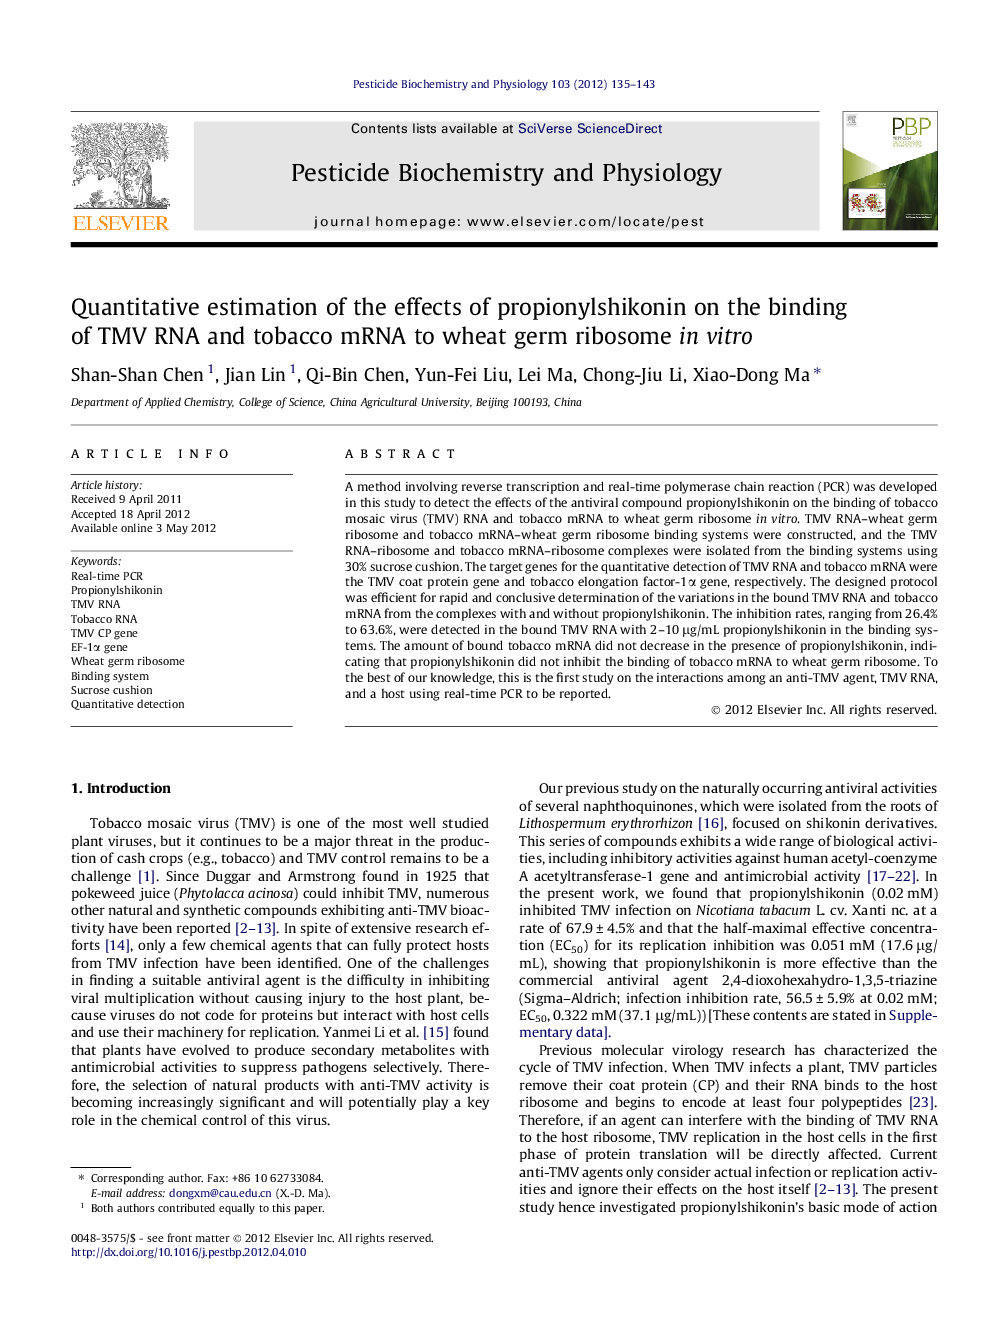 Quantitative estimation of the effects of propionylshikonin on the binding of TMV RNA and tobacco mRNA to wheat germ ribosome in vitro